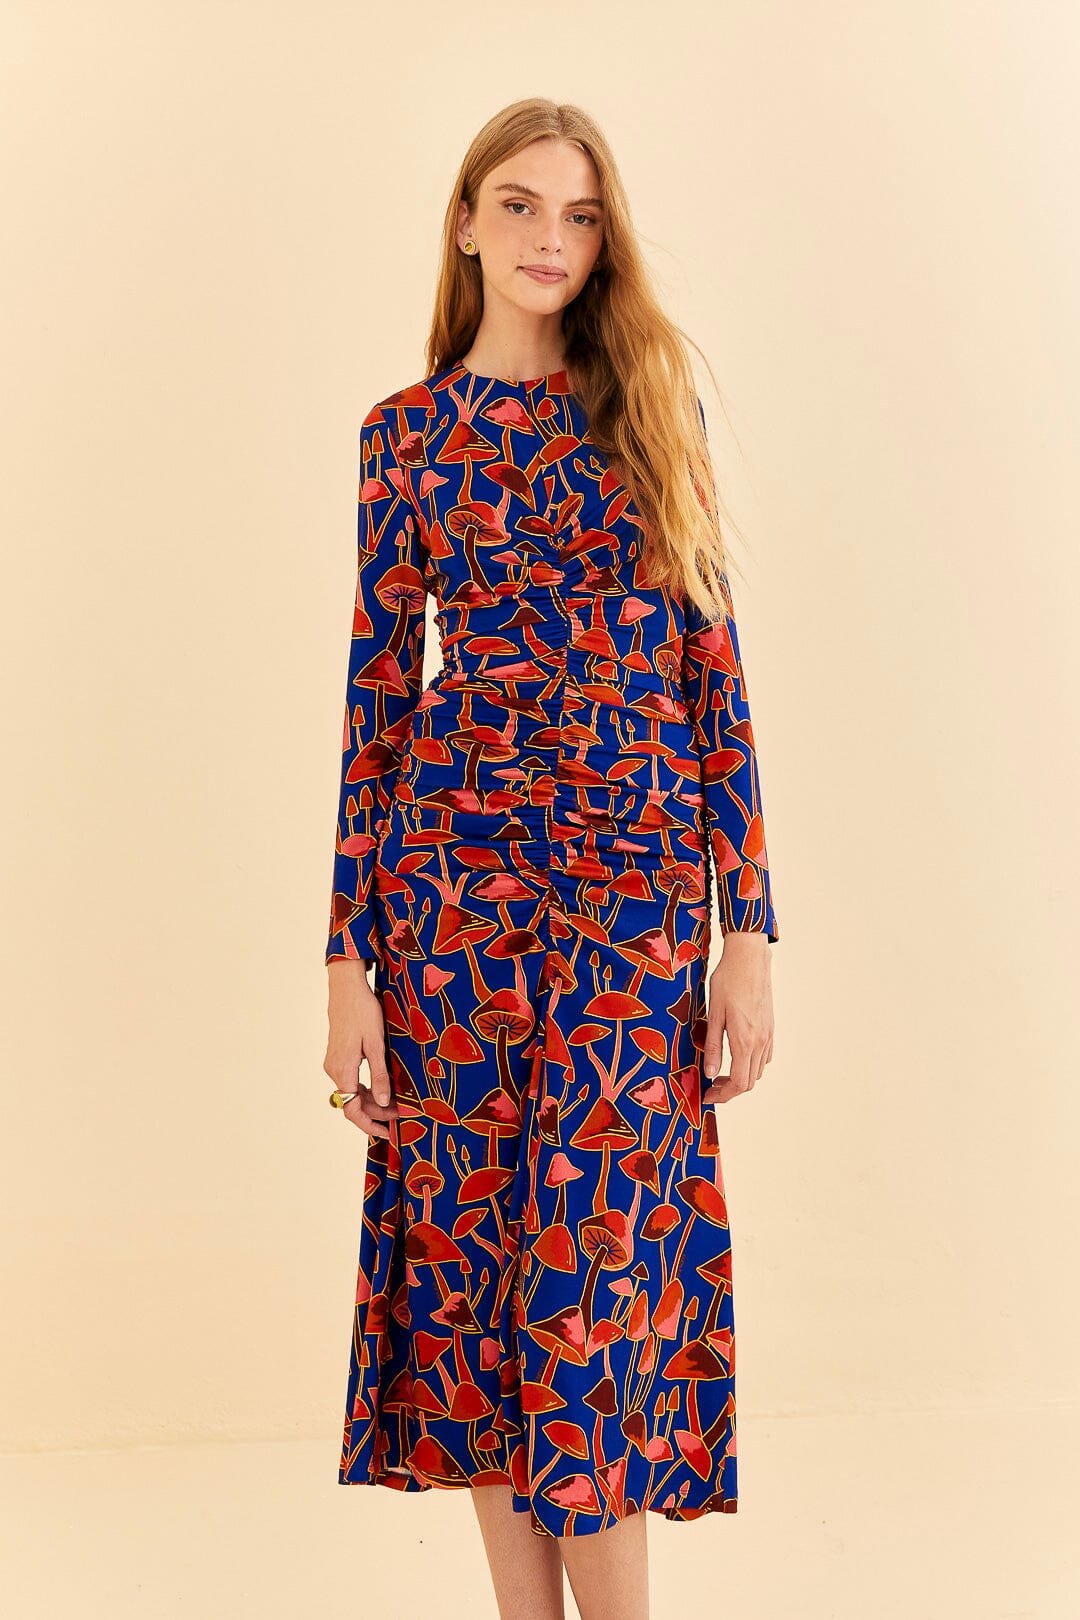 Bright Blue Mushroom Sketch Lenzing™ Ecovero™ Viscose Midi Dress